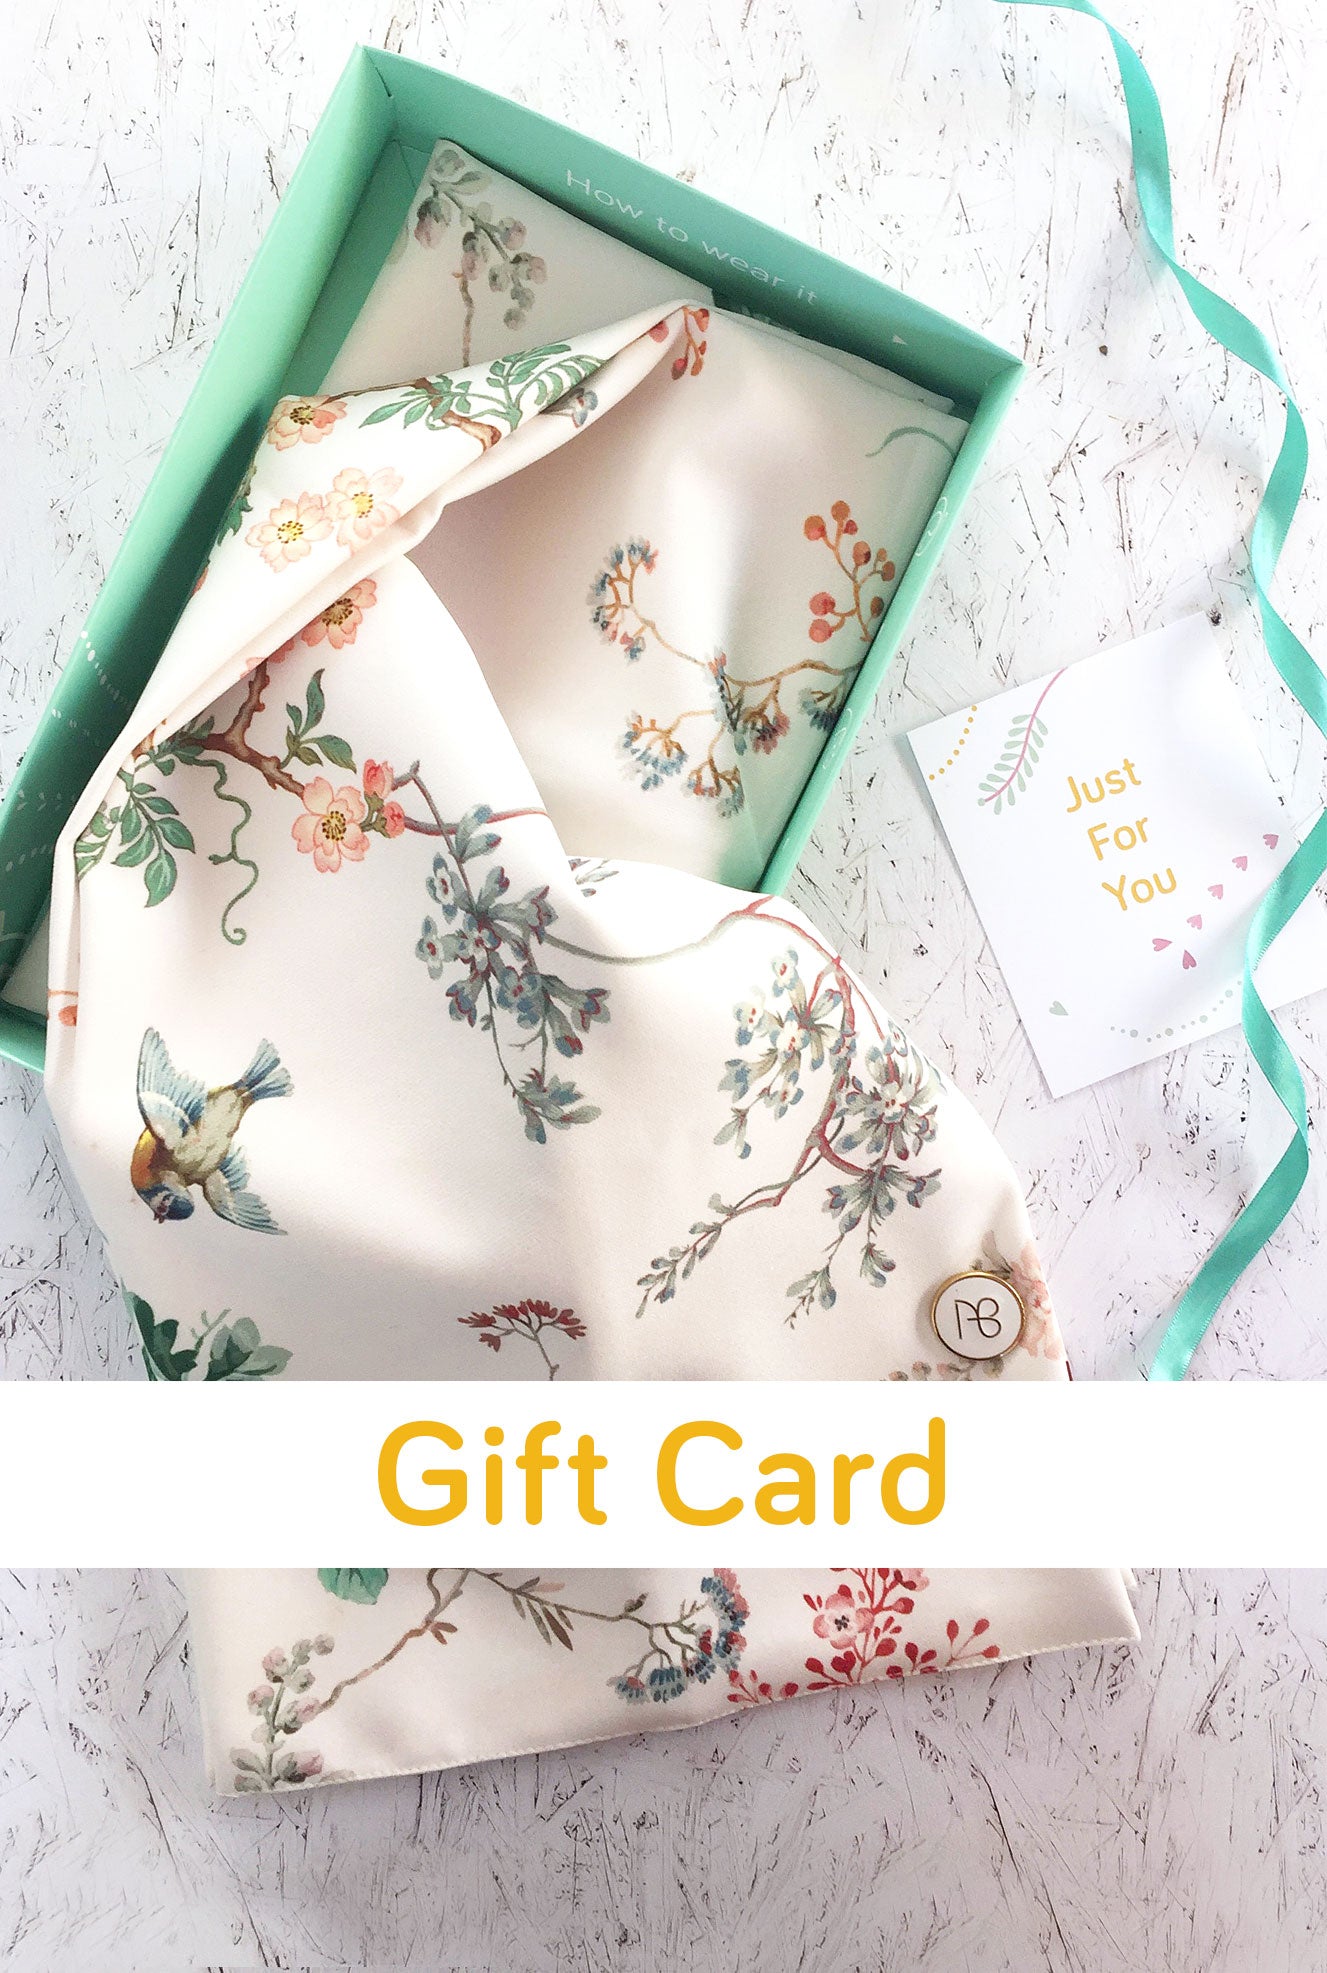 Gift Card - שובר מתנה